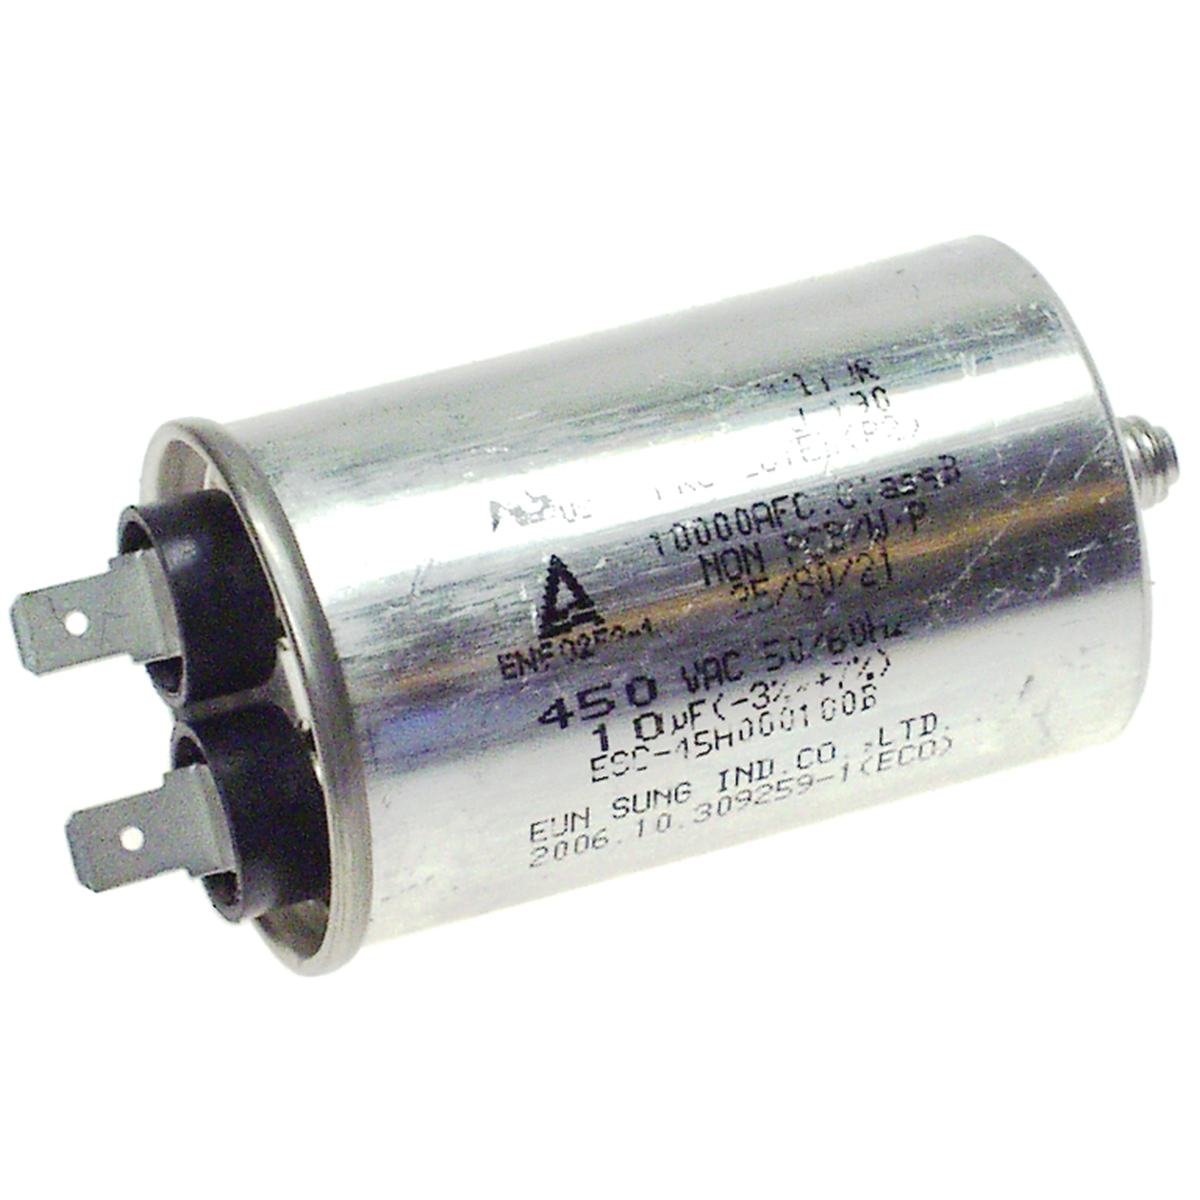 Kondensator 10 µF 450V